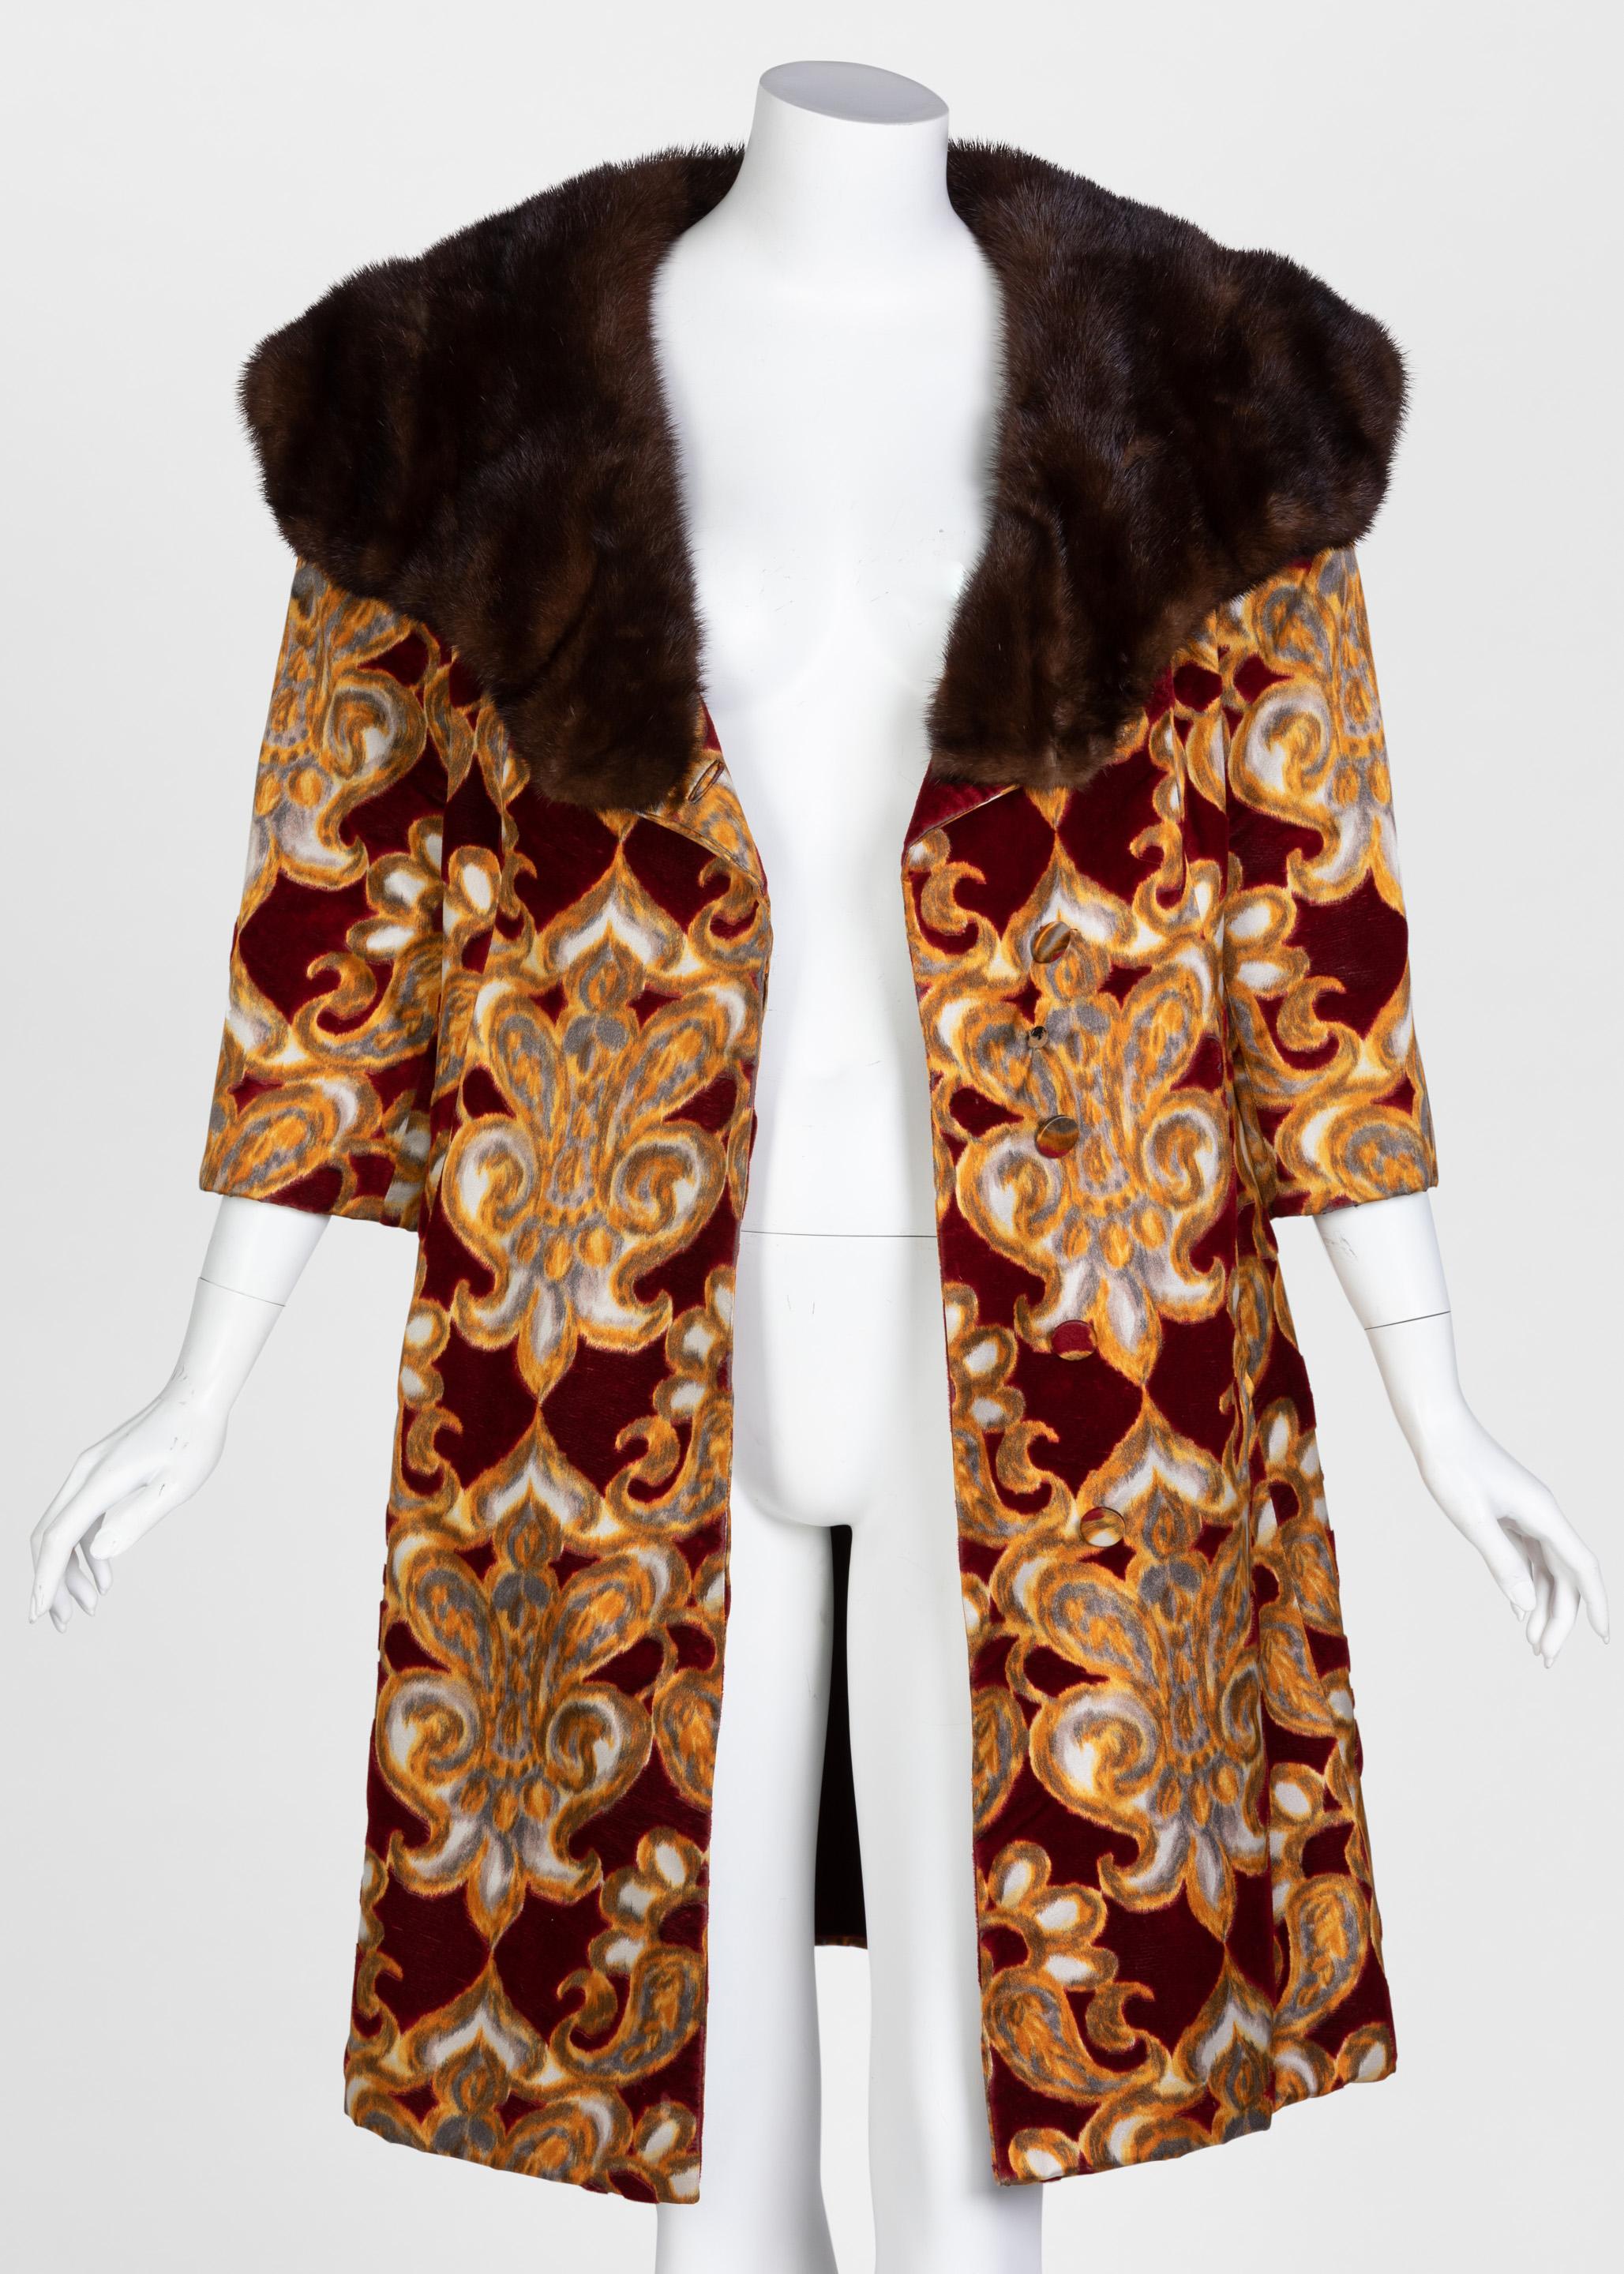 Galanos Couture Red Gold Velvet Fur Trimmed Coat & Dress Ensemble, 1982 For Sale 1